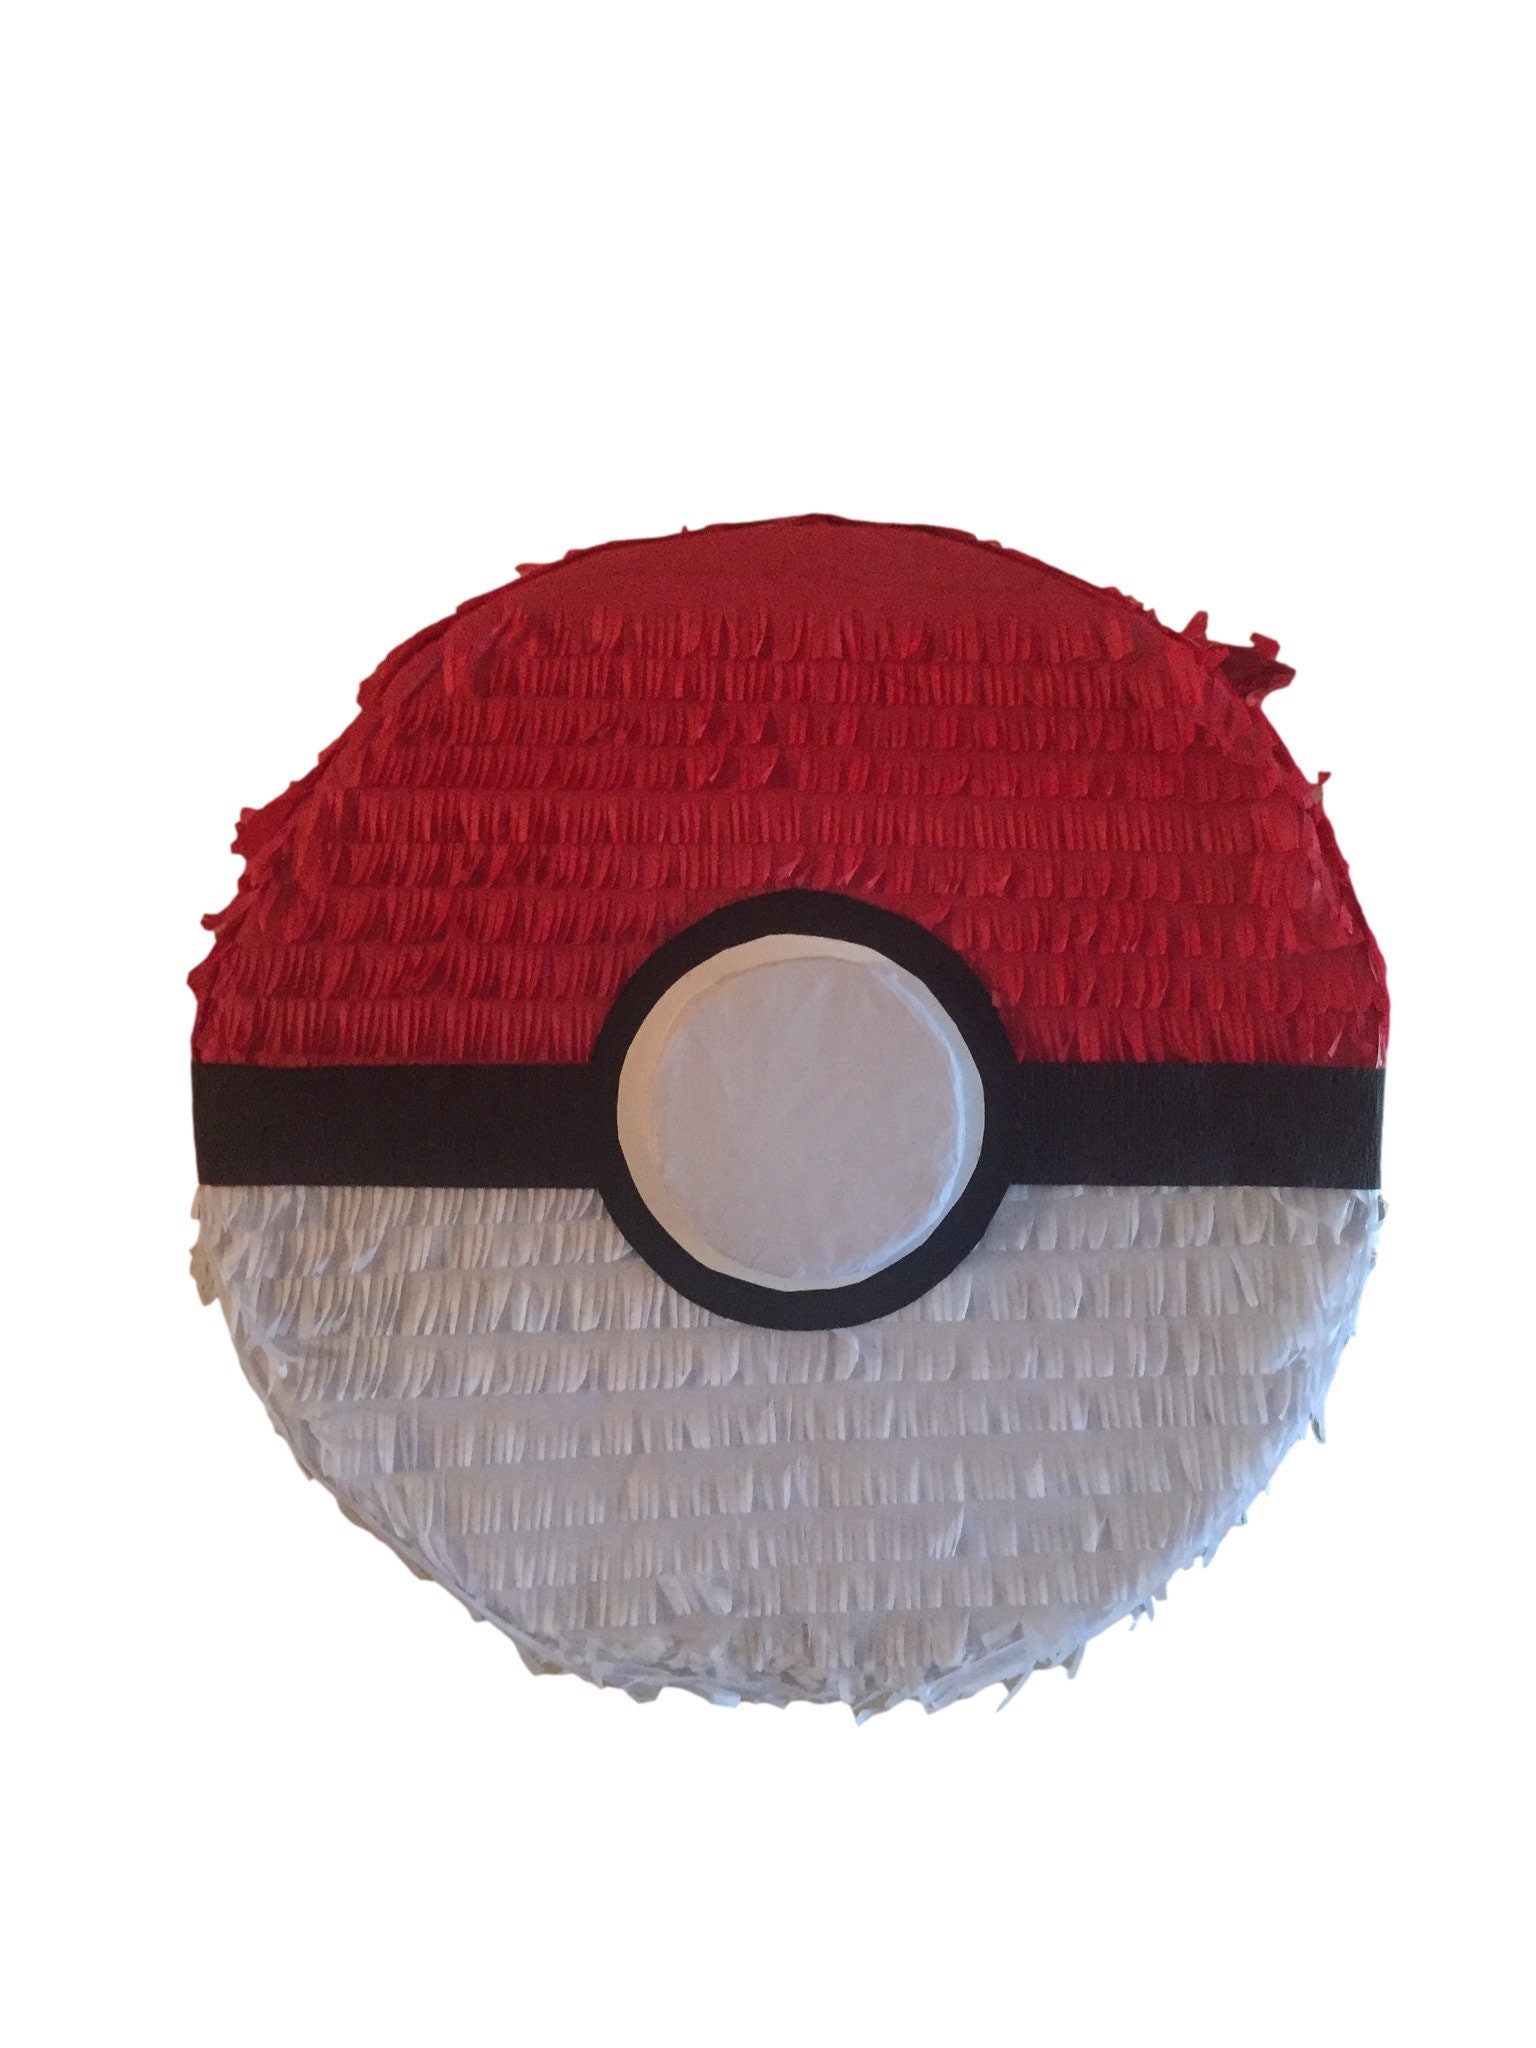 Pull String Poké Ball Pinata Kit with Favors - Pokémon